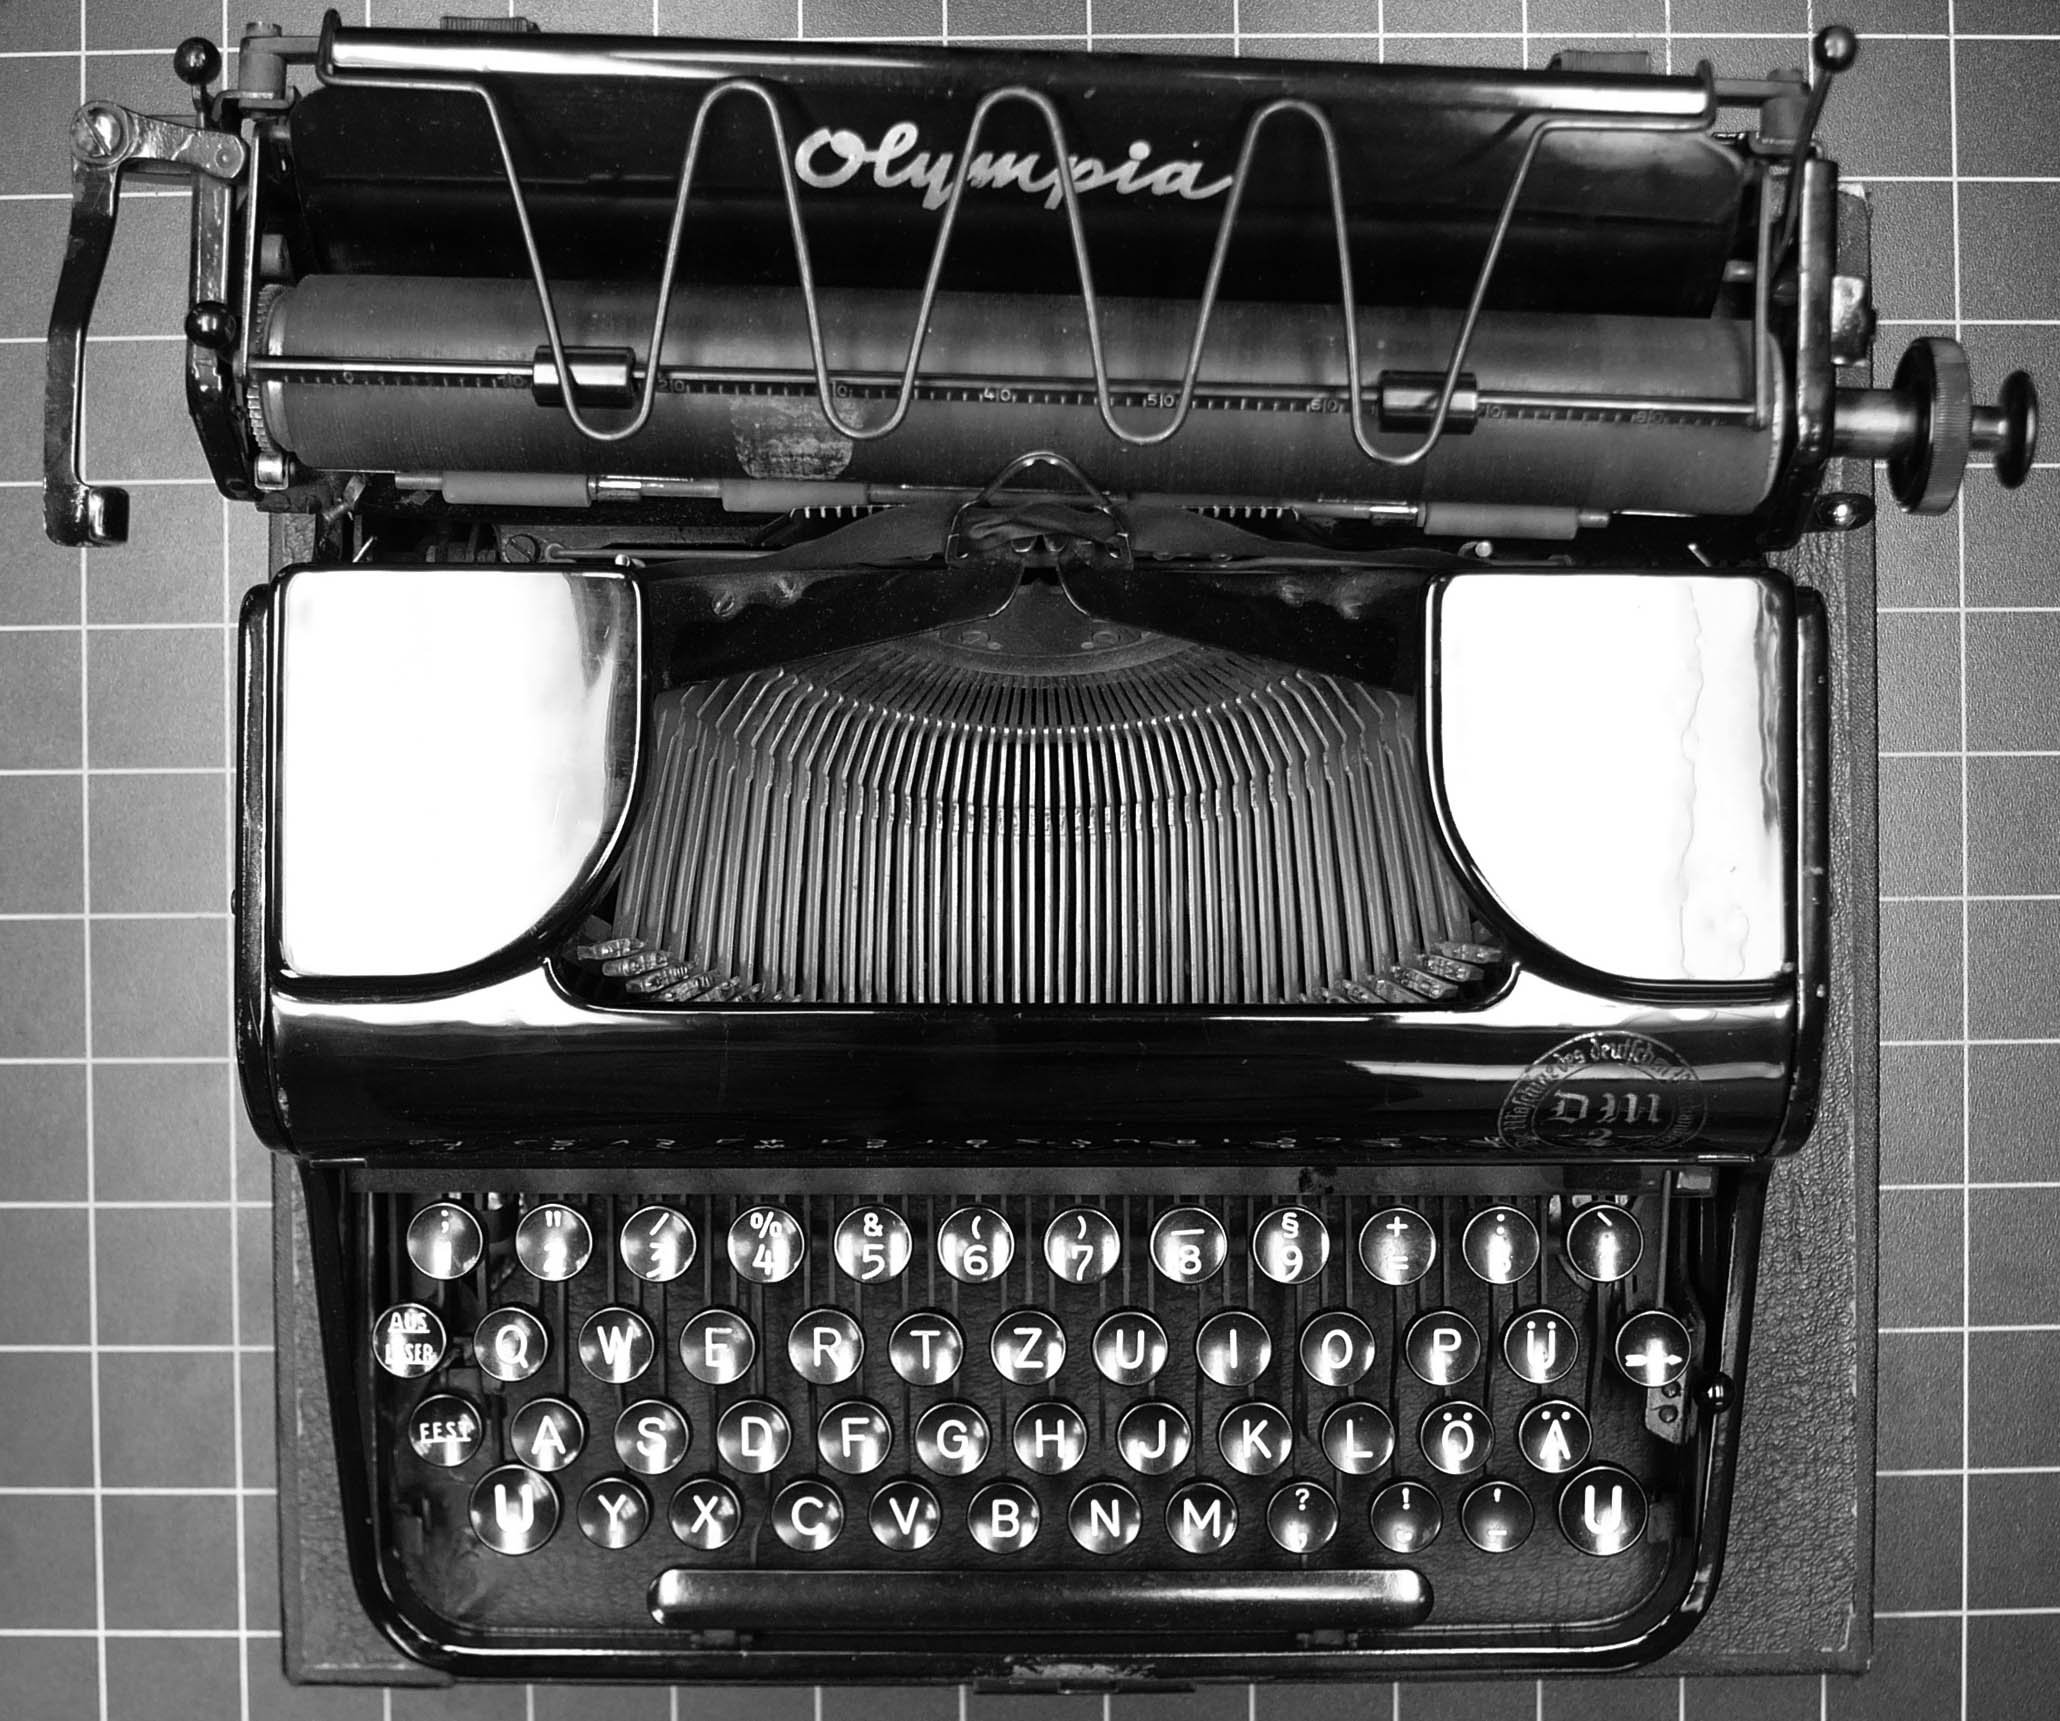 Typewriter olympia hg